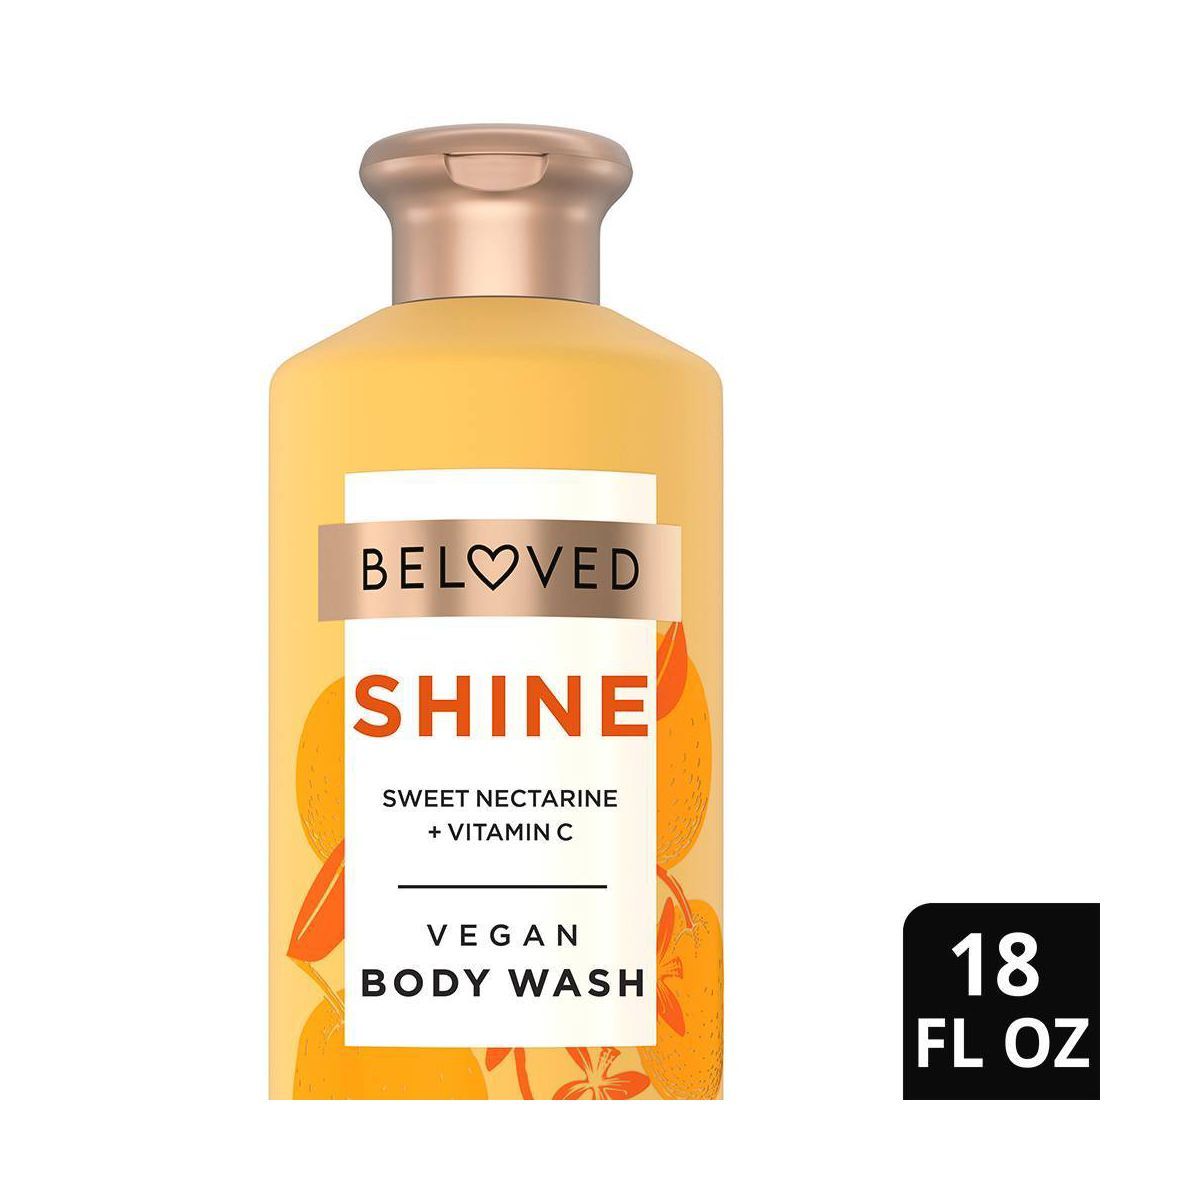 Beloved Shine Vegan Body Wash with Sweet Nectarine & Vitamin C - 18 fl oz | Target